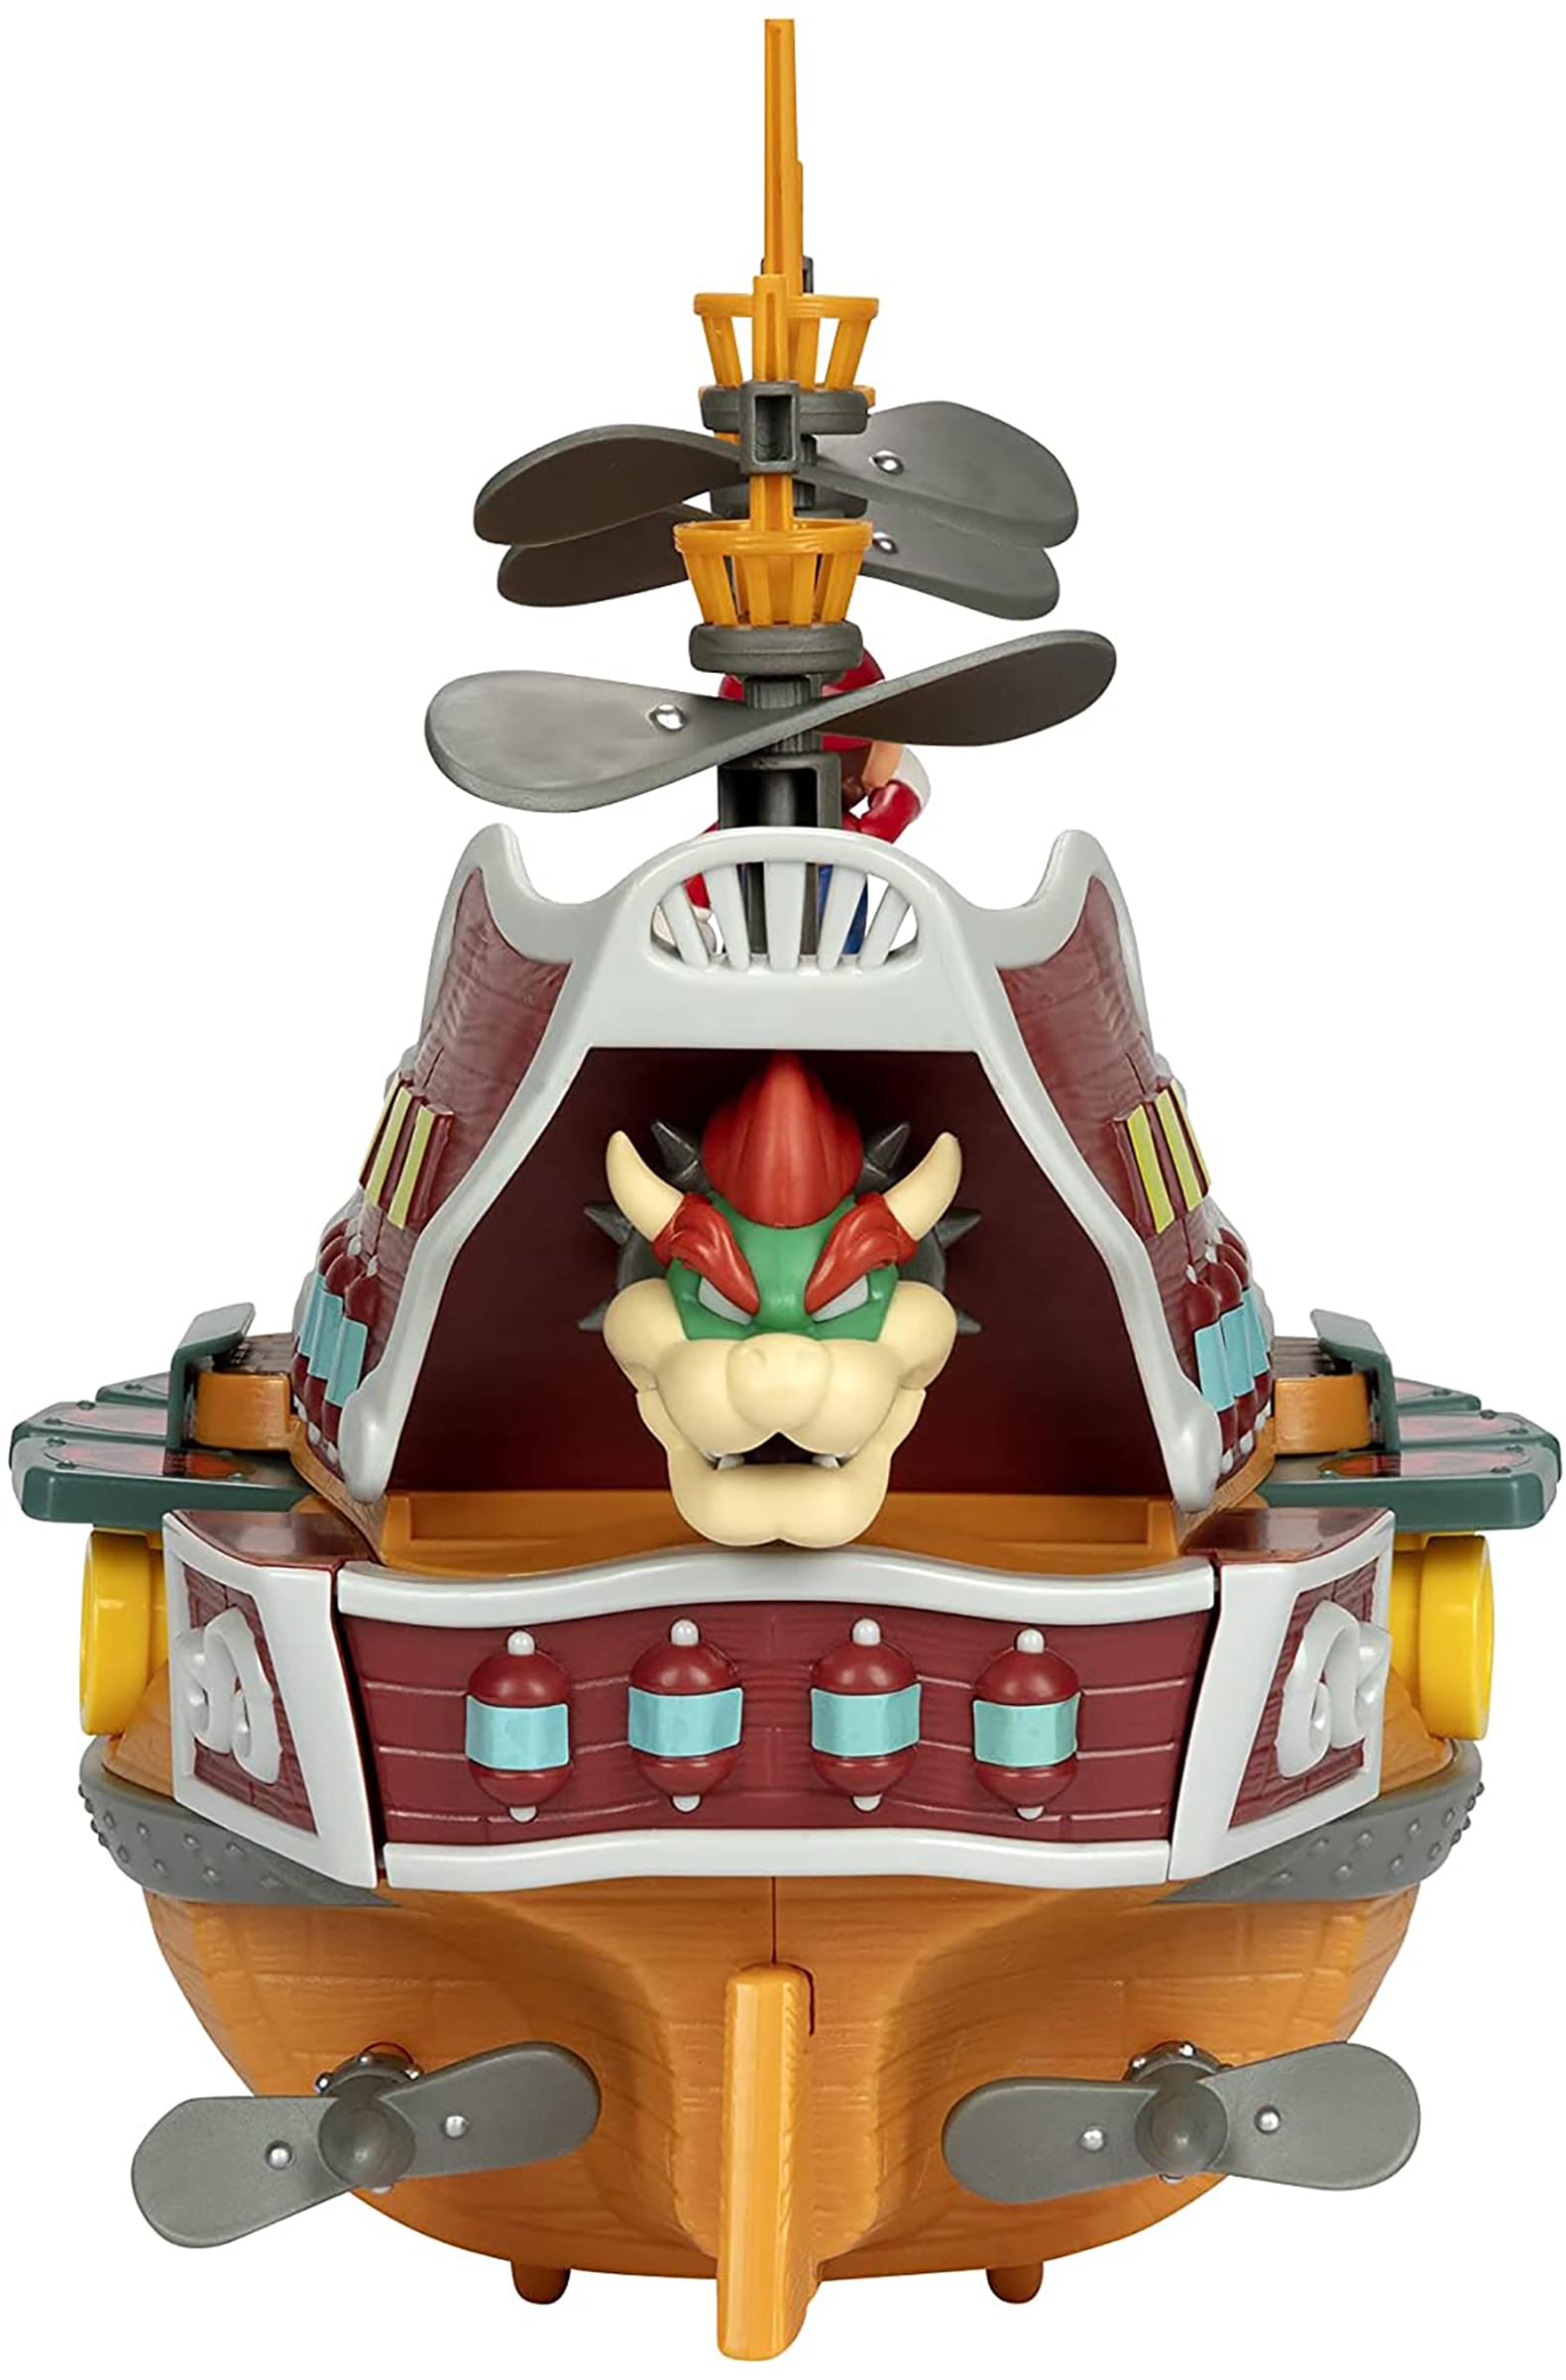 Super Mario World of Nintendo Bowsers Air Ship Deluxe Diorama Playset